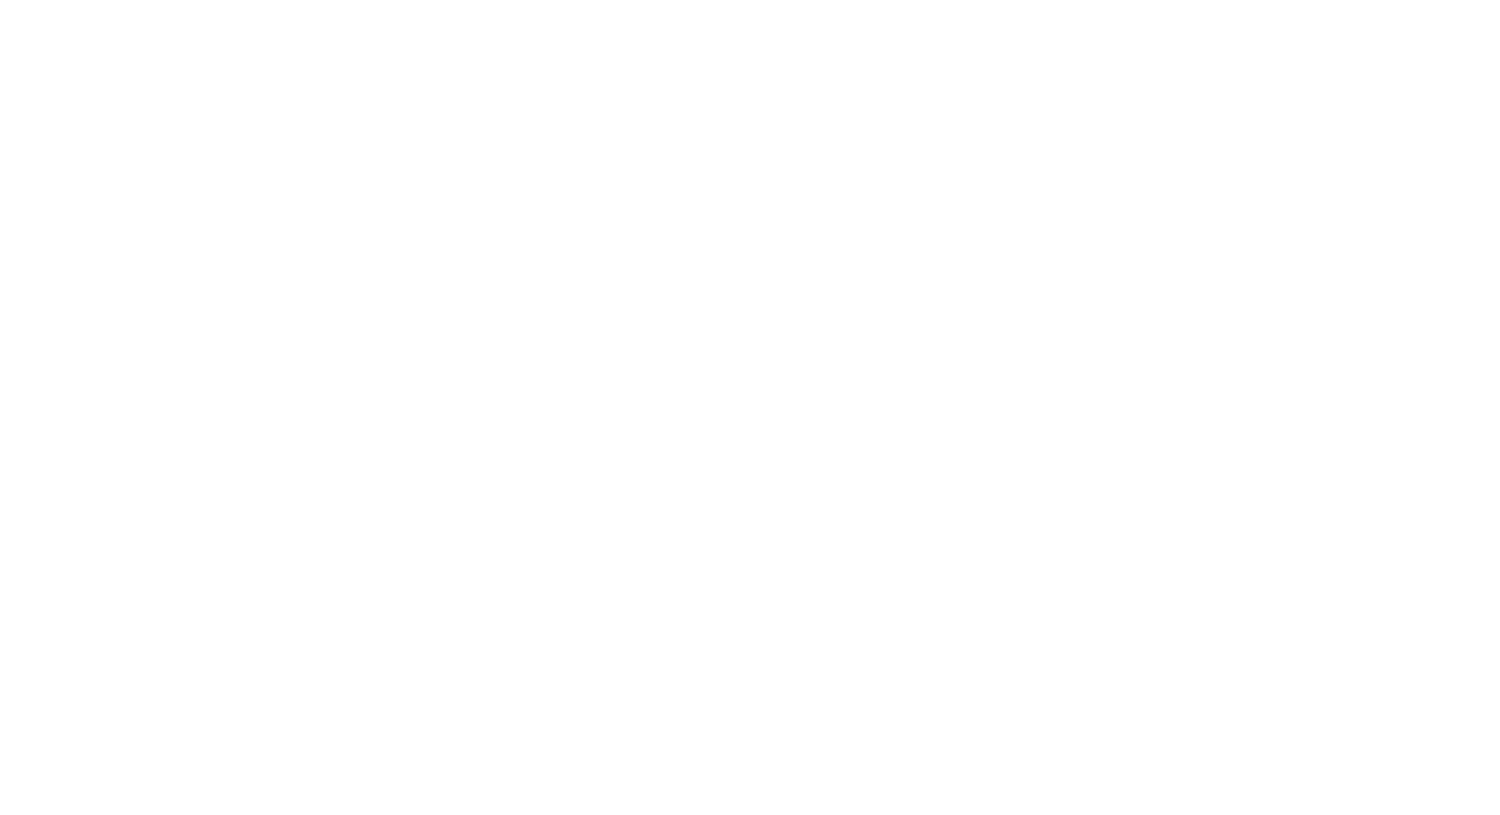 Vista College Prep